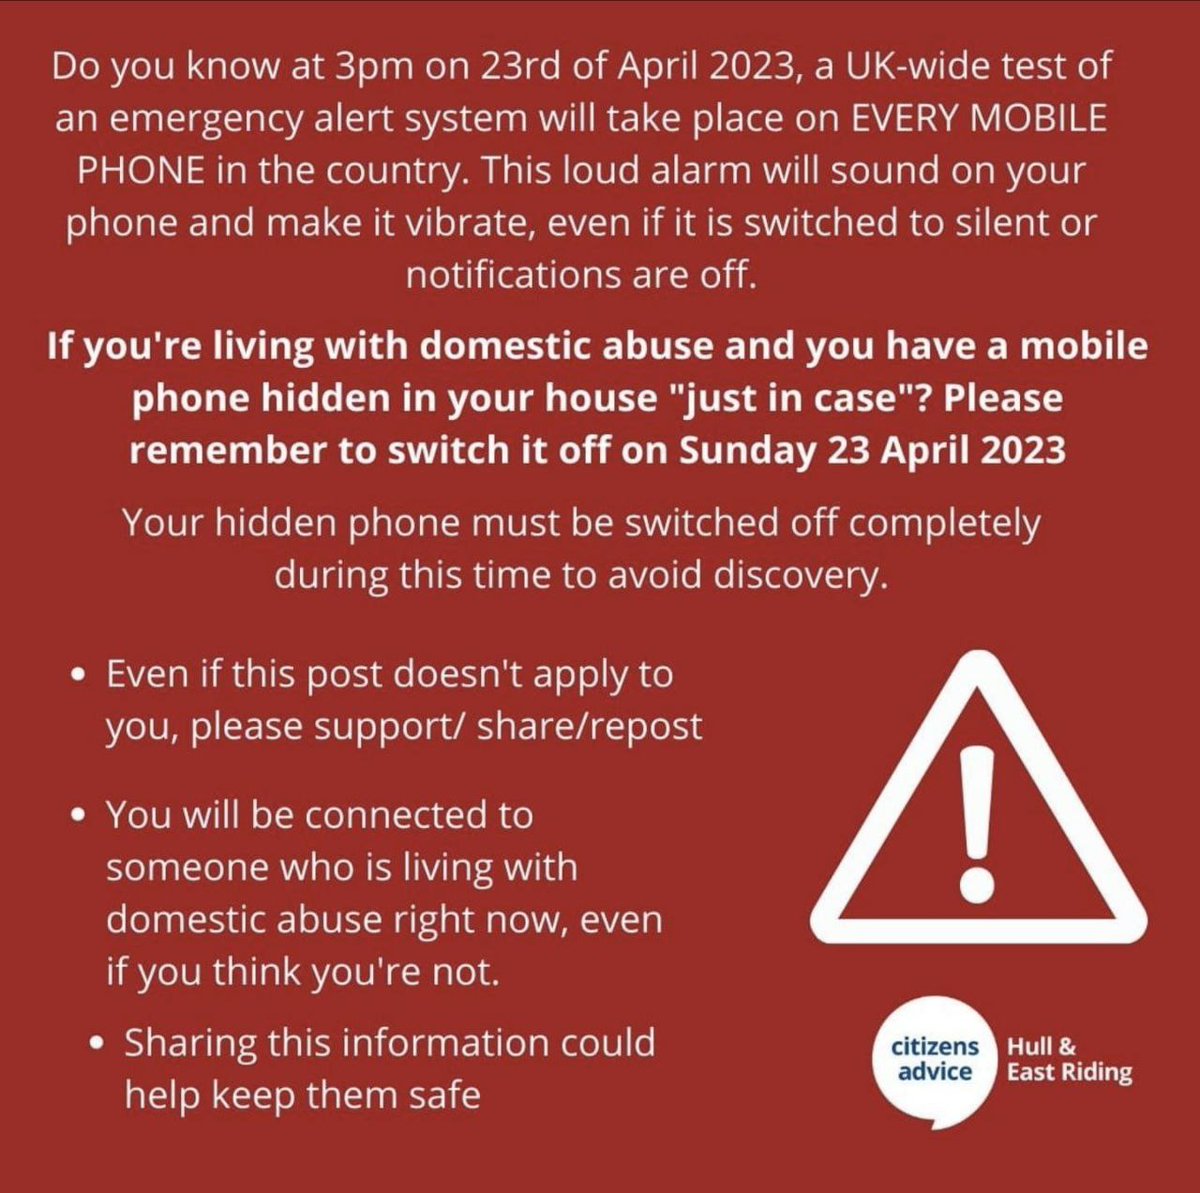 Fellow UK folks, ahead of the emergency alert test on the 23/04/23: